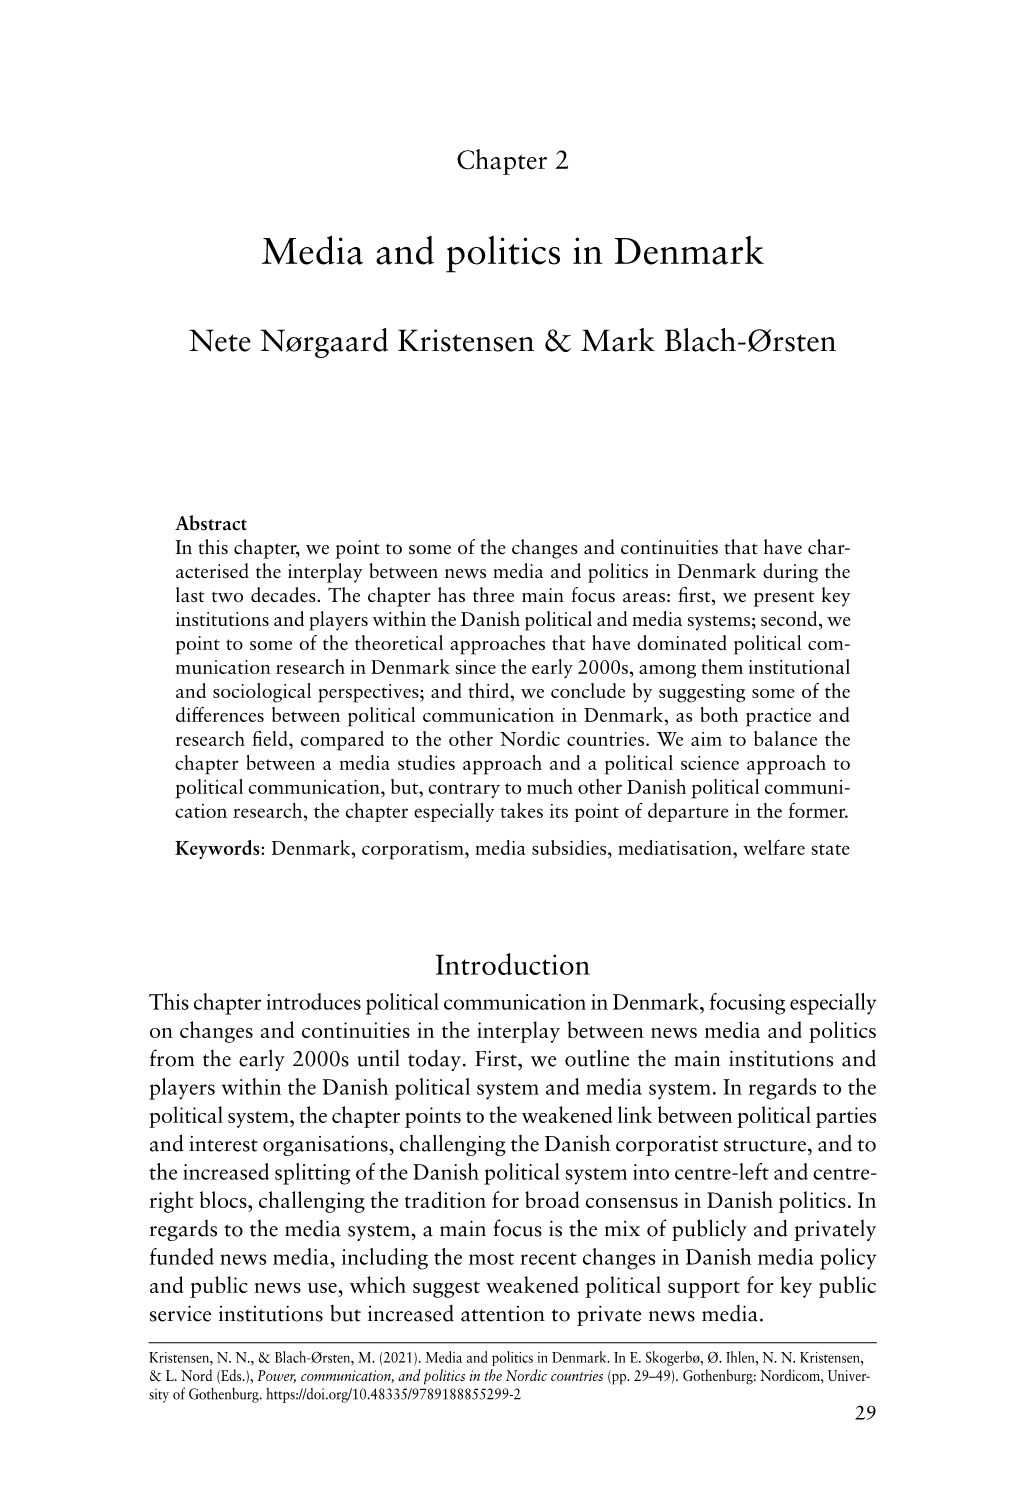 Media and Politics in Denmark